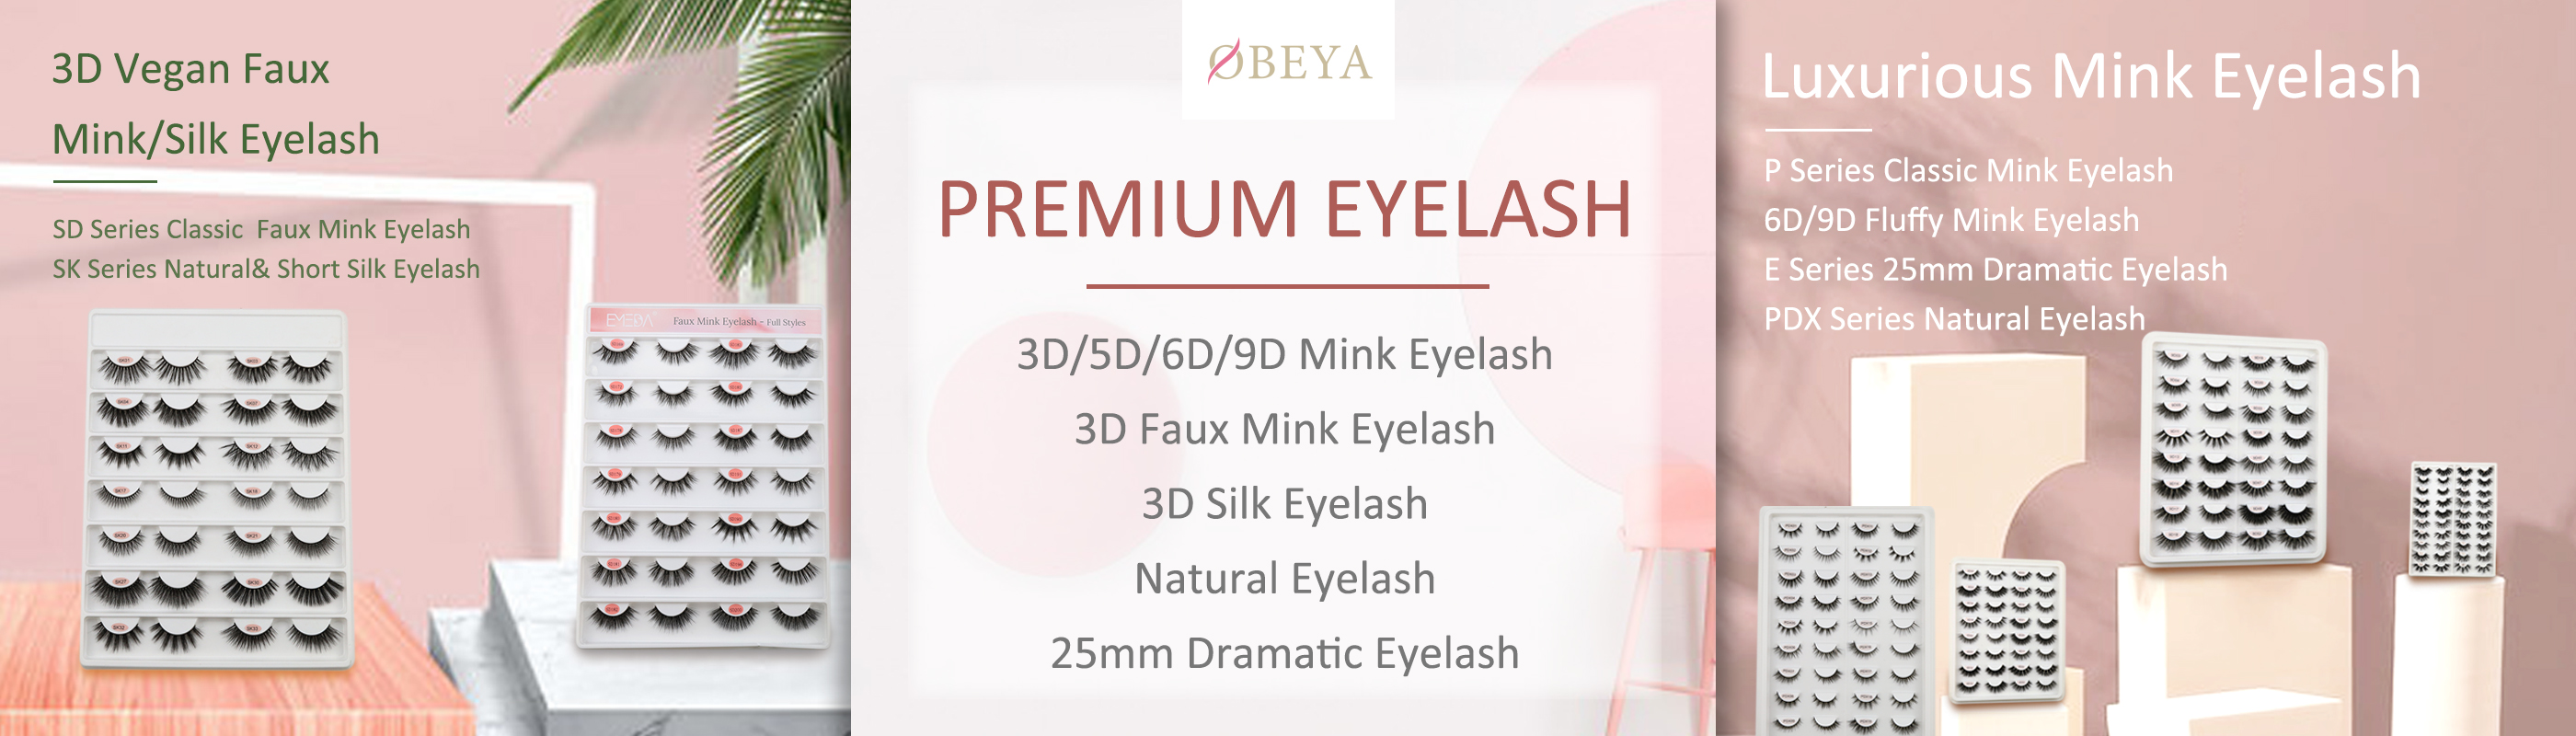 3D eyelash vendors1257